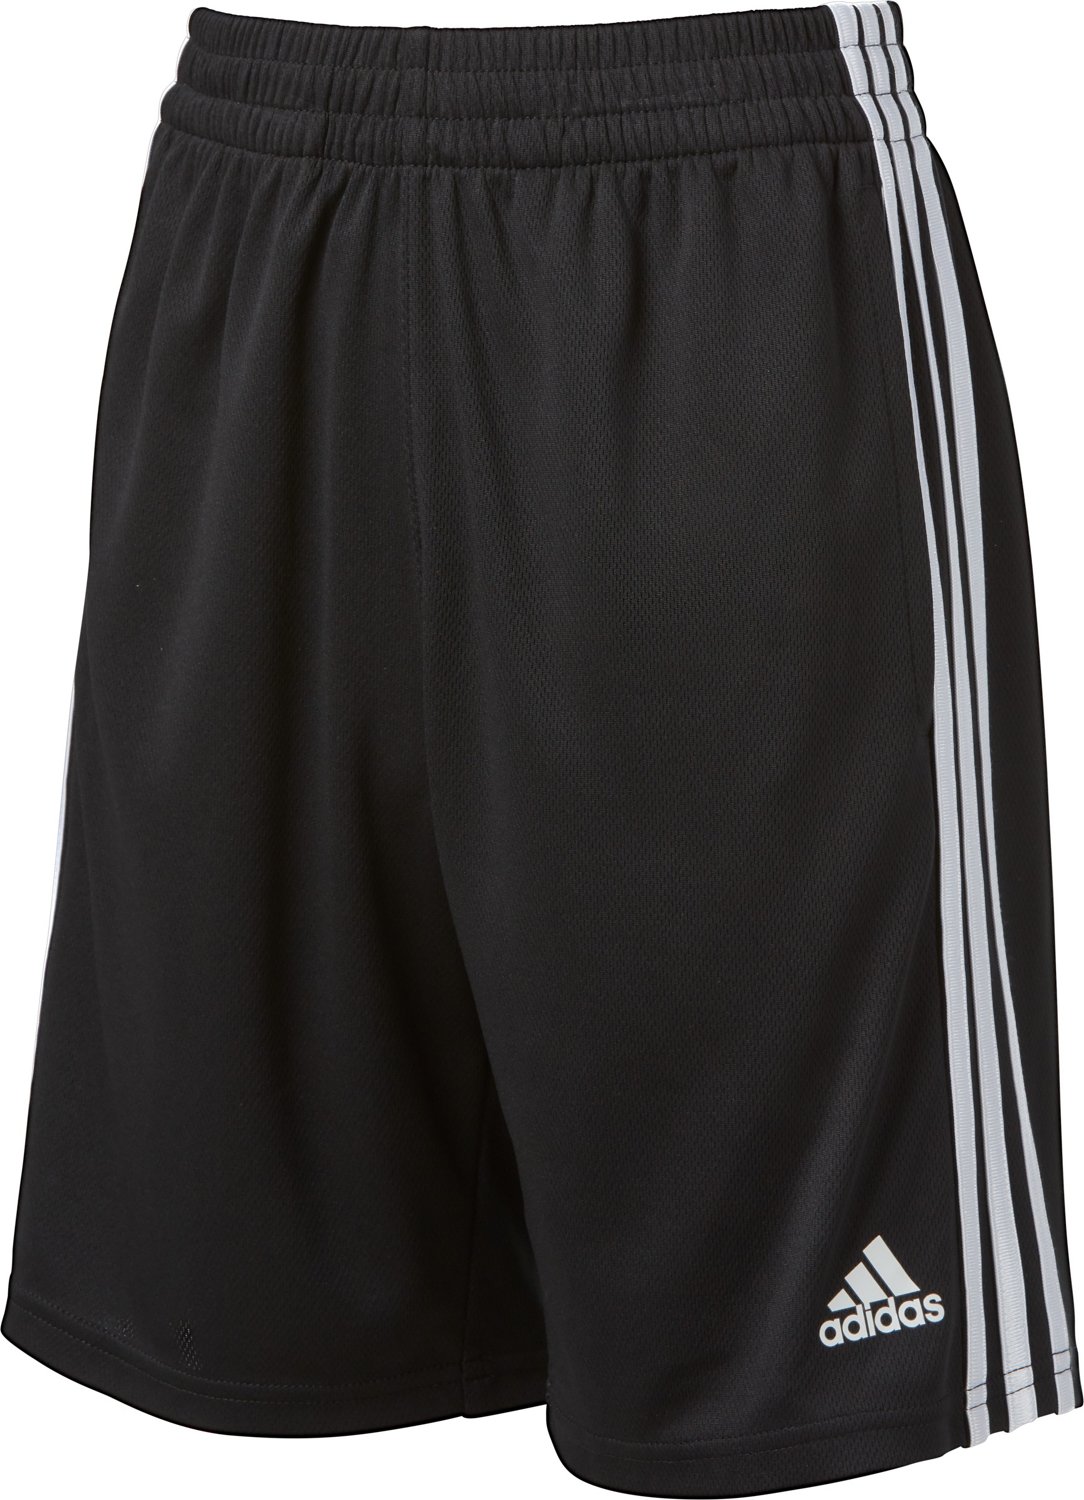 adidas Boys Classic 3S Shorts